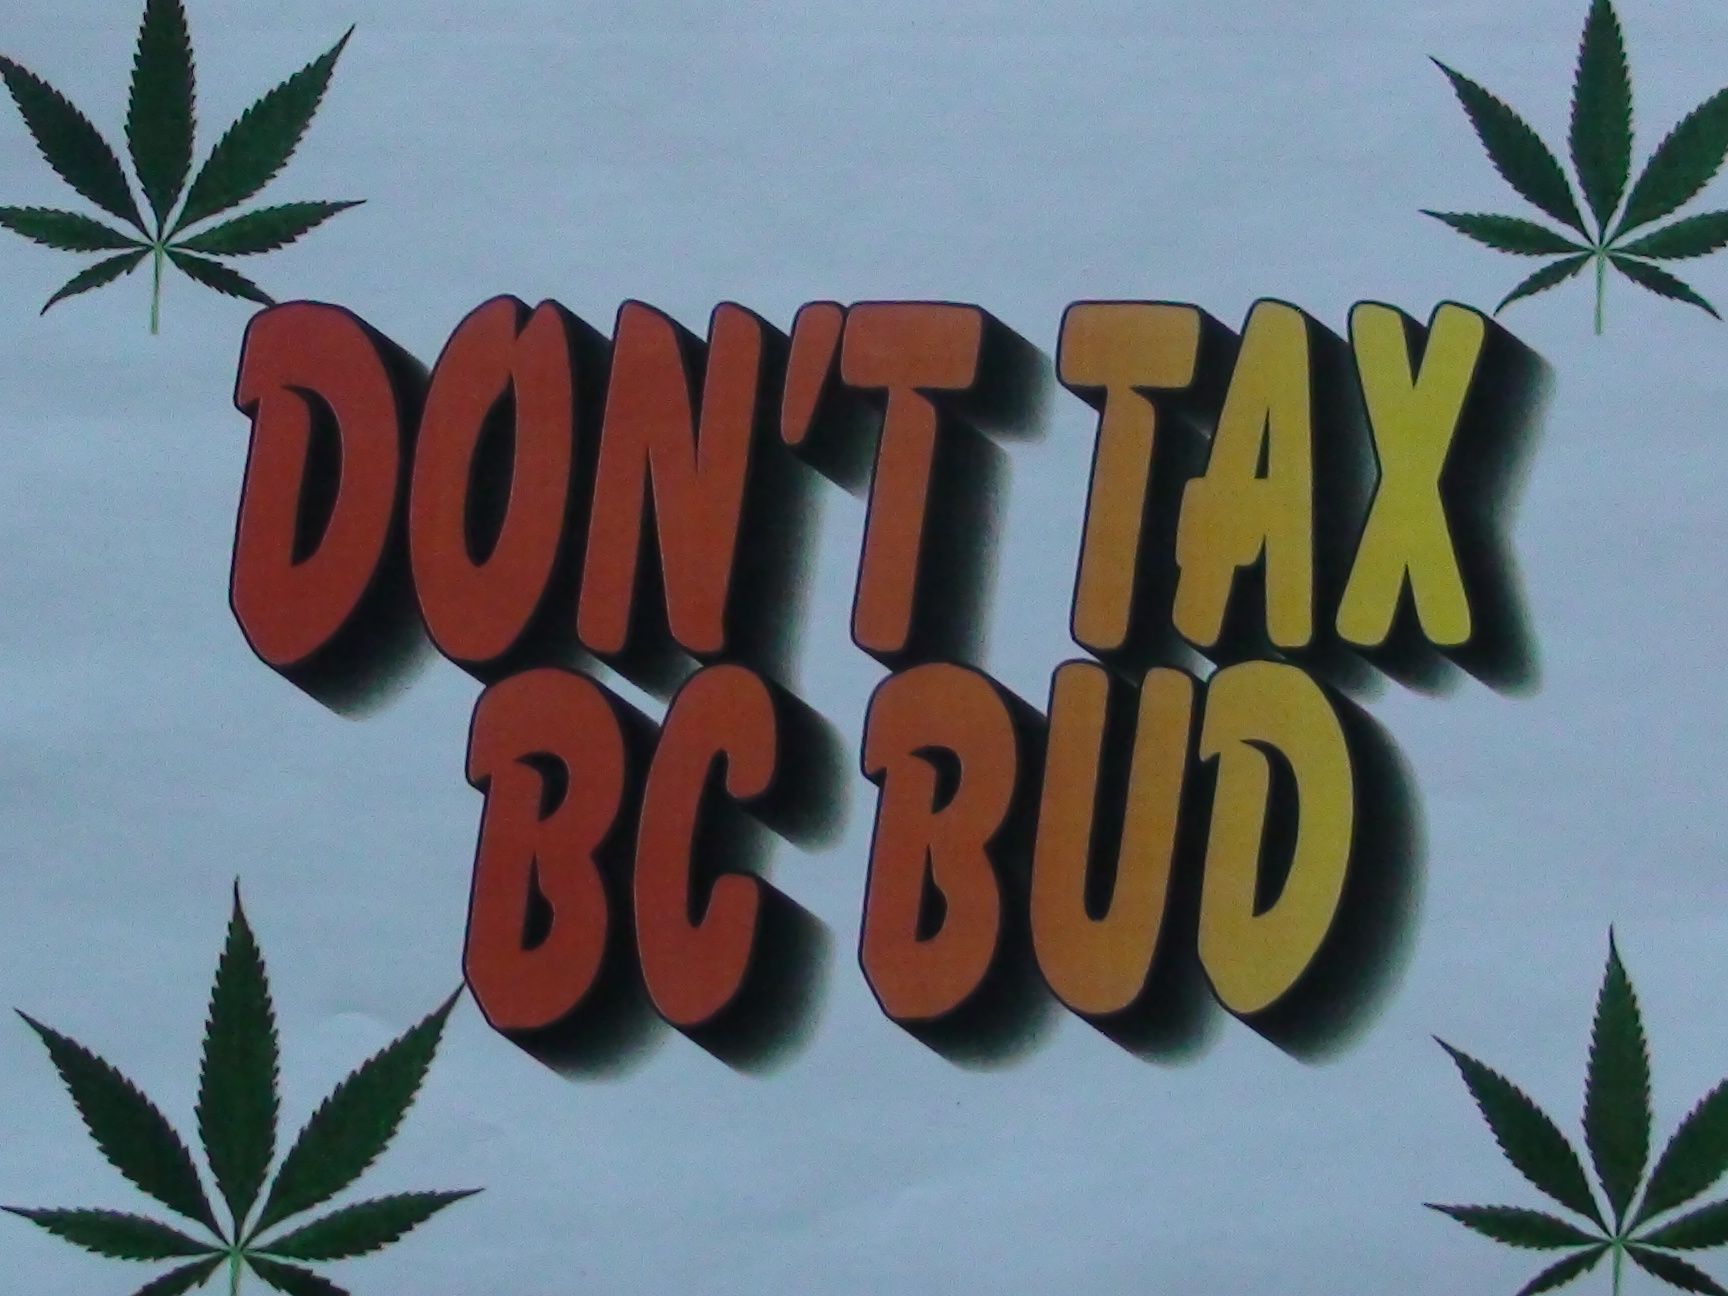 weed celebrating praising weekly don't tax bc bud 2.JPG